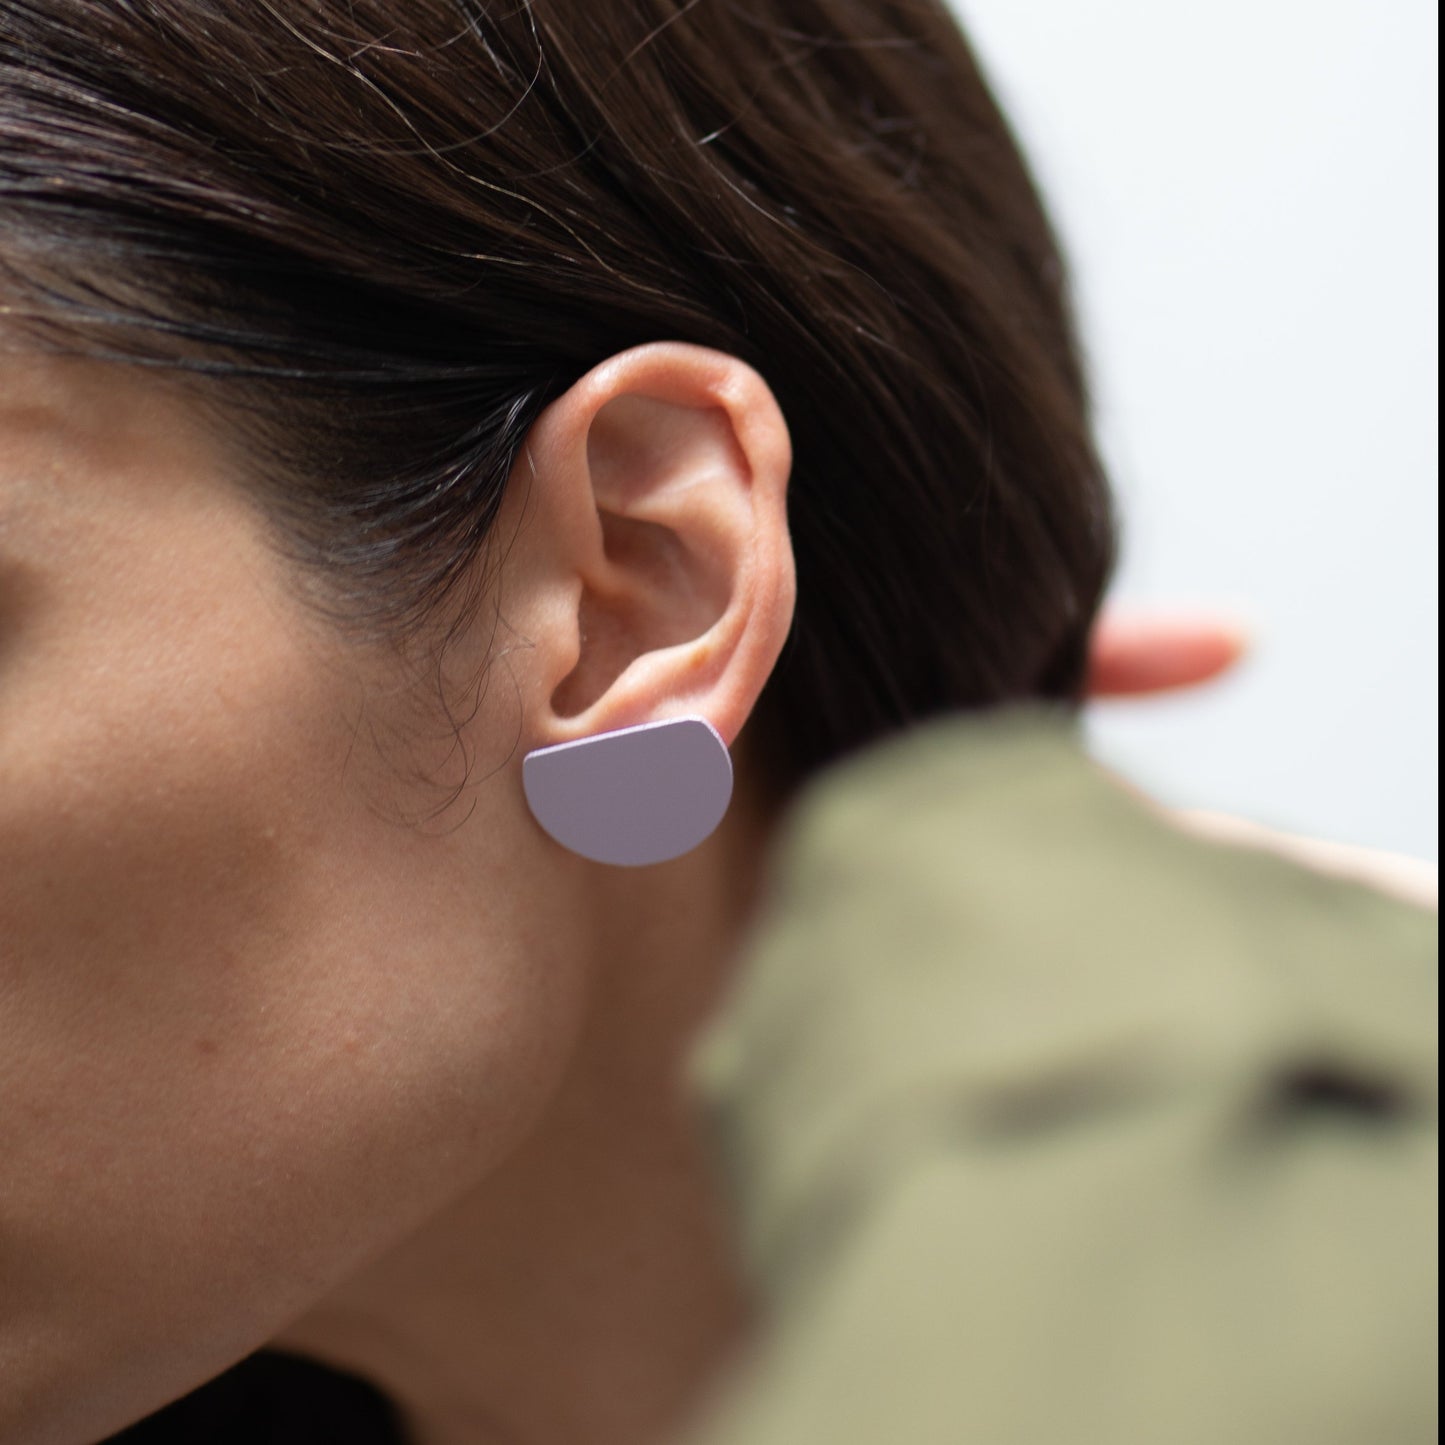 Brass w/ Sterling Posts earrings in lilac on person's ear.